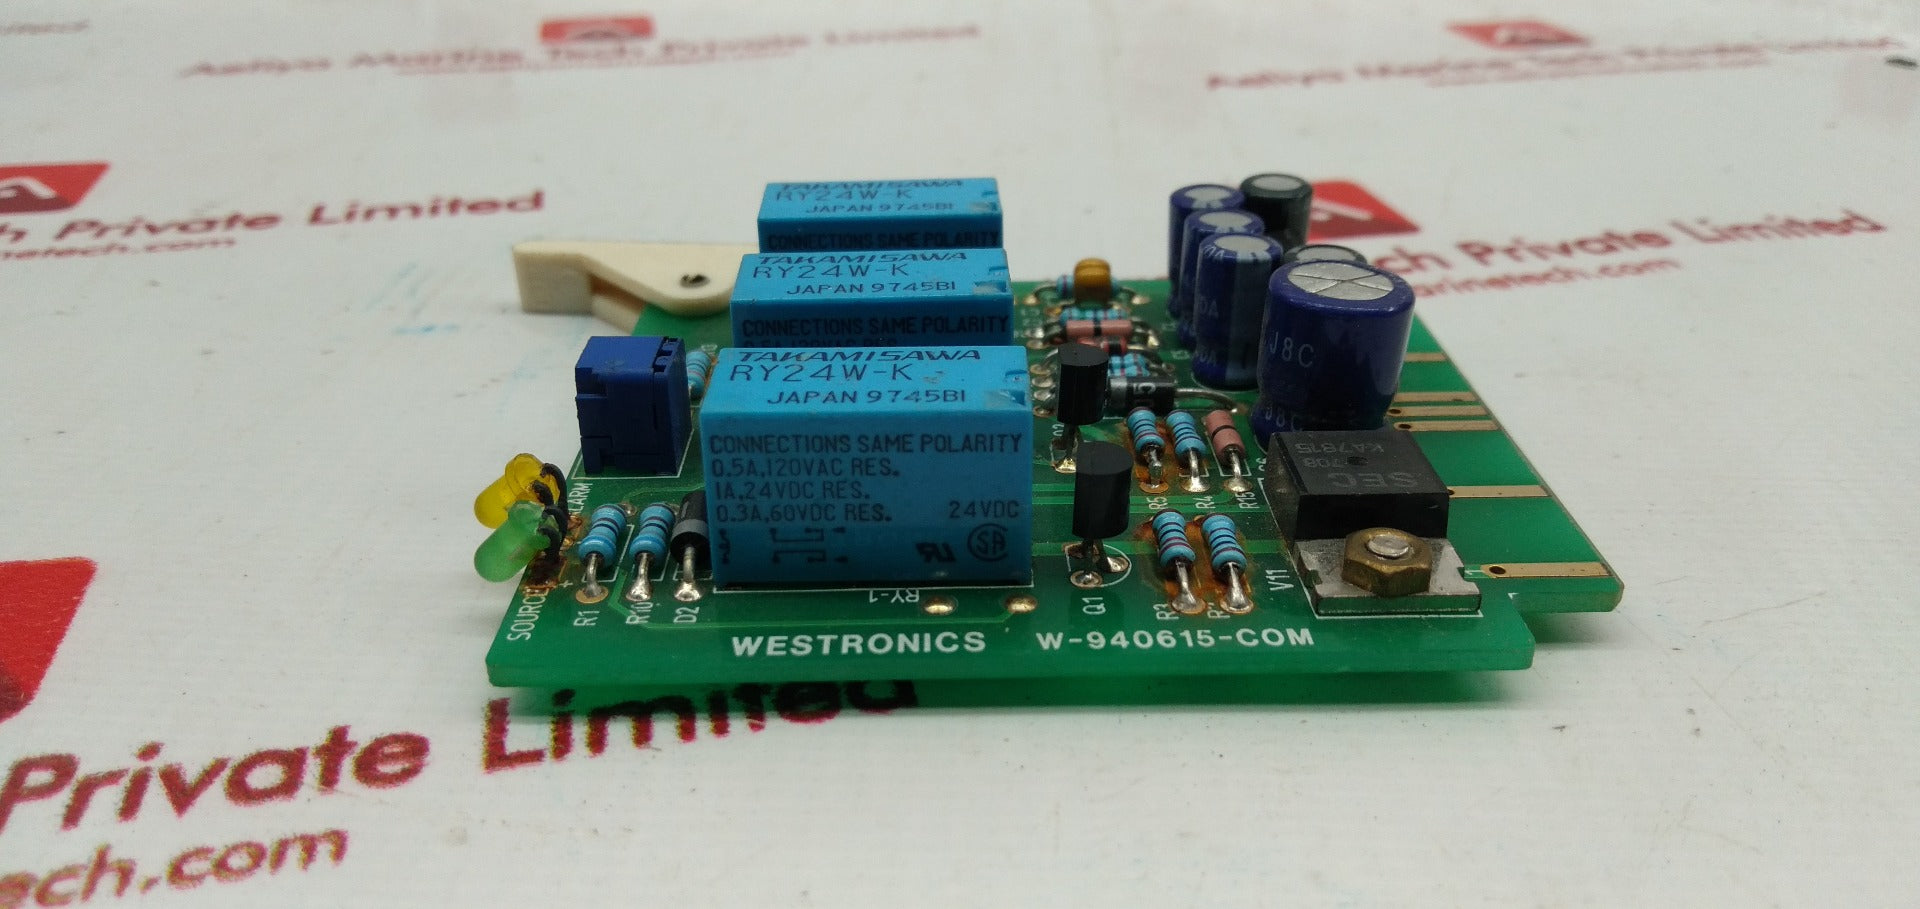 Westronics W-940615-com Pcb Card Printed Circuit Board